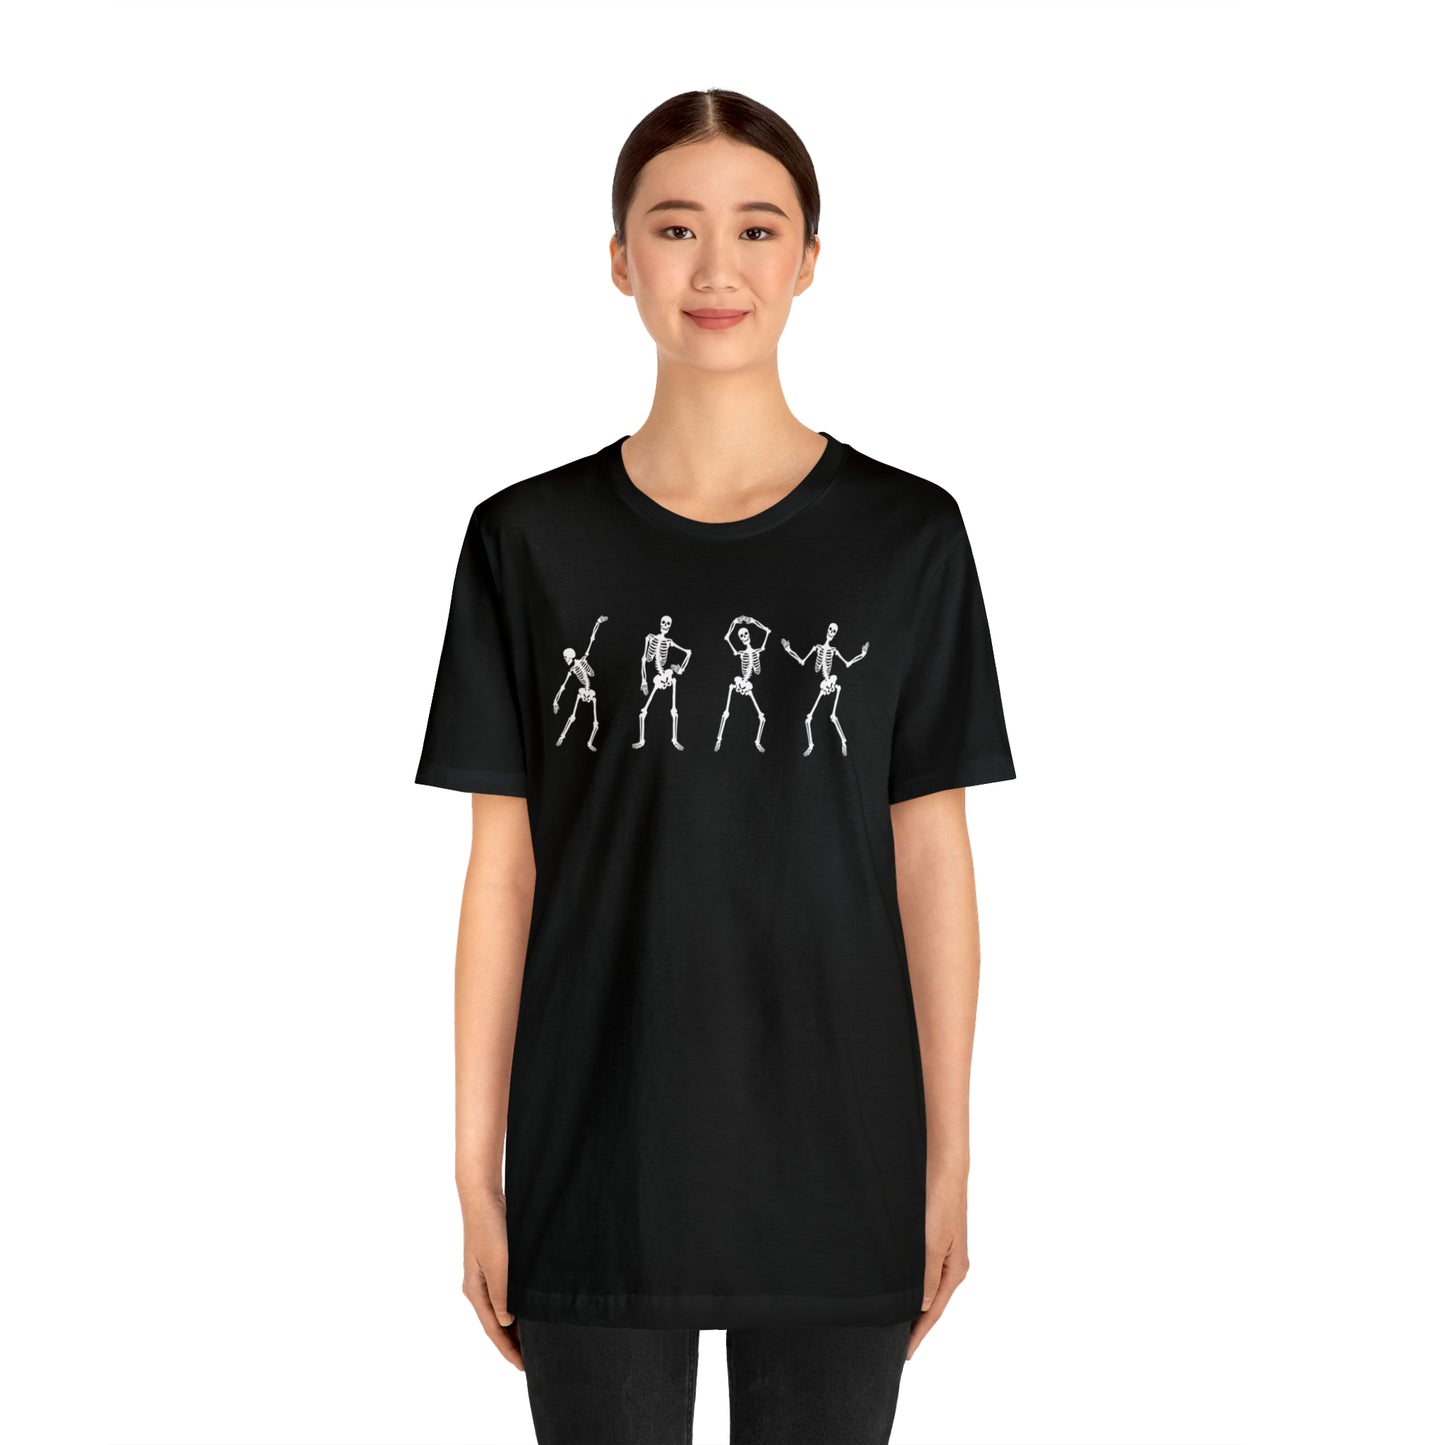 Dancing Skeleton Halloween Shirt, Pumpkin Shirt, Fall tshirt Spooky Season TShirt, Fall Shirts for Women, T534